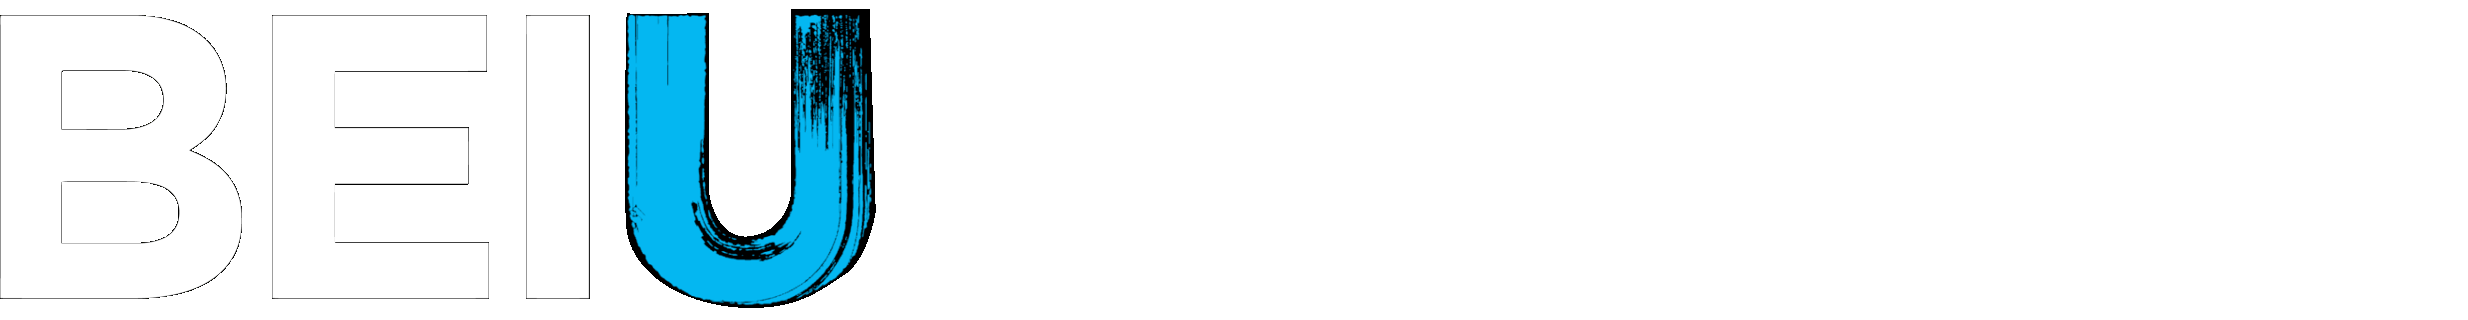 BEIU logo